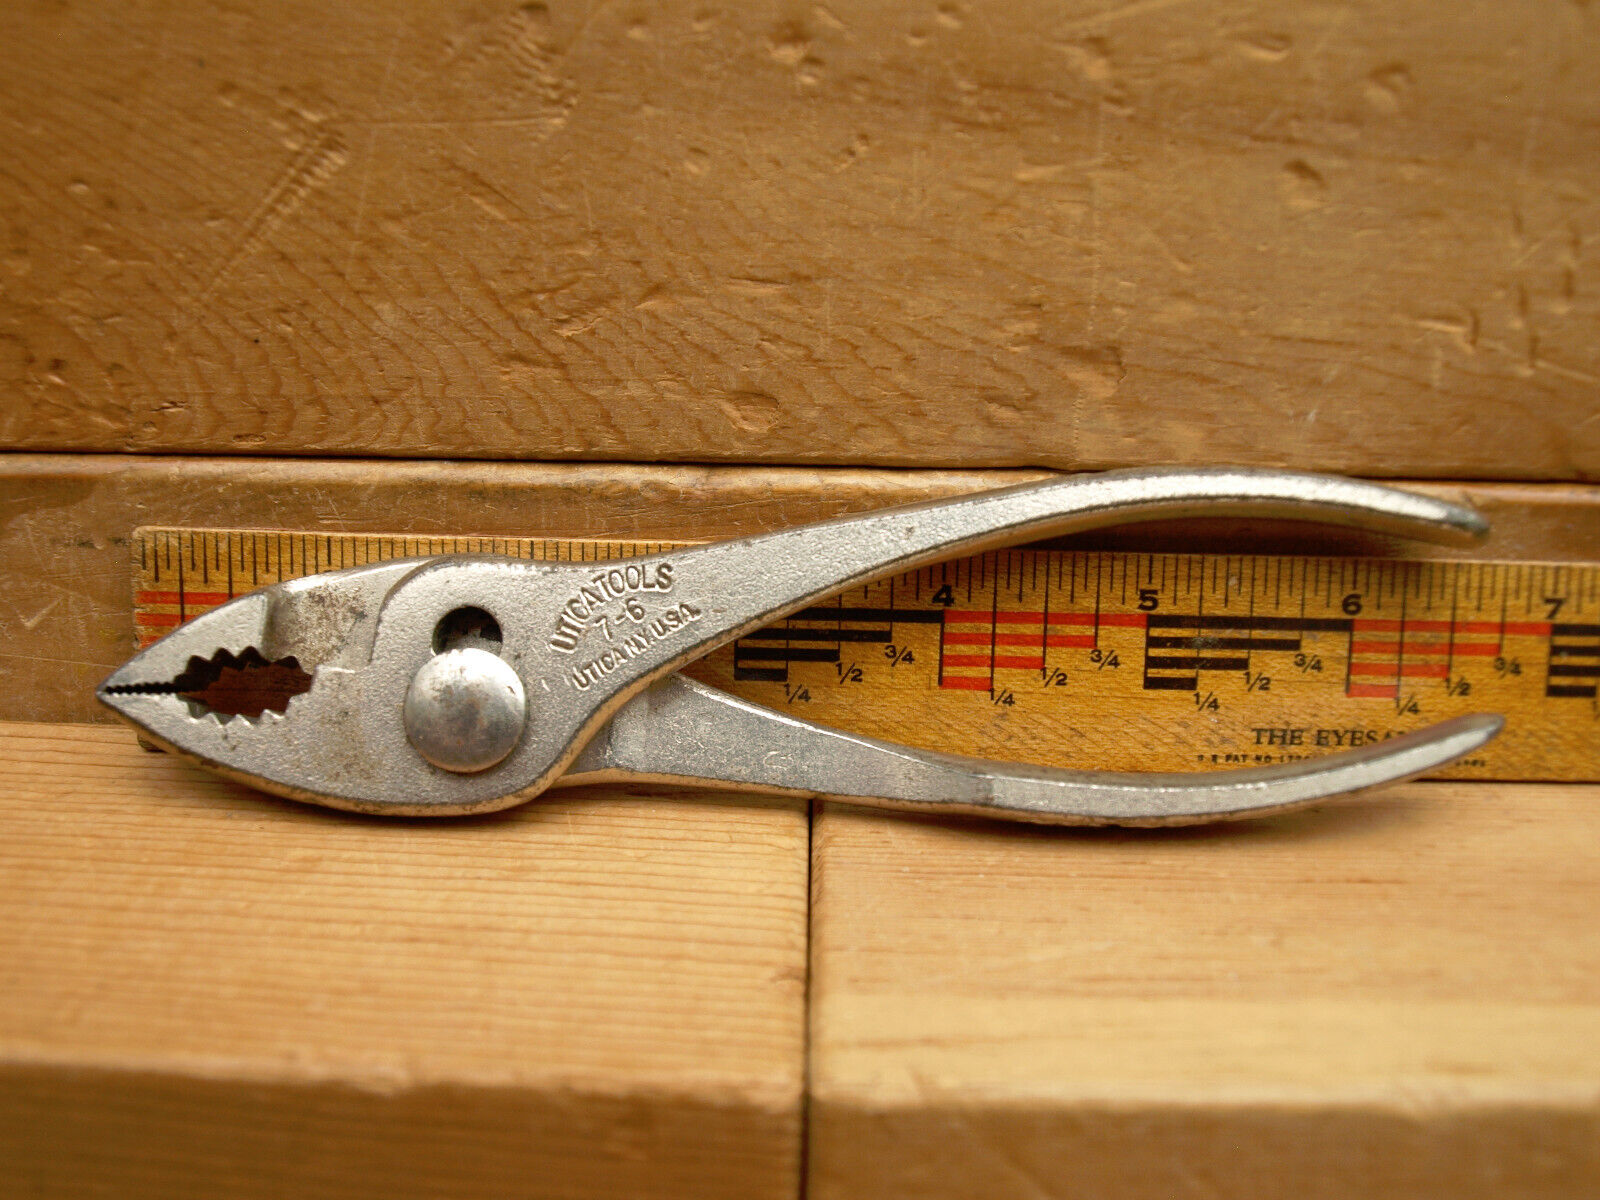 Utica Tools 7-6 Combination Slip-Joint Pliers 1940s-1960s